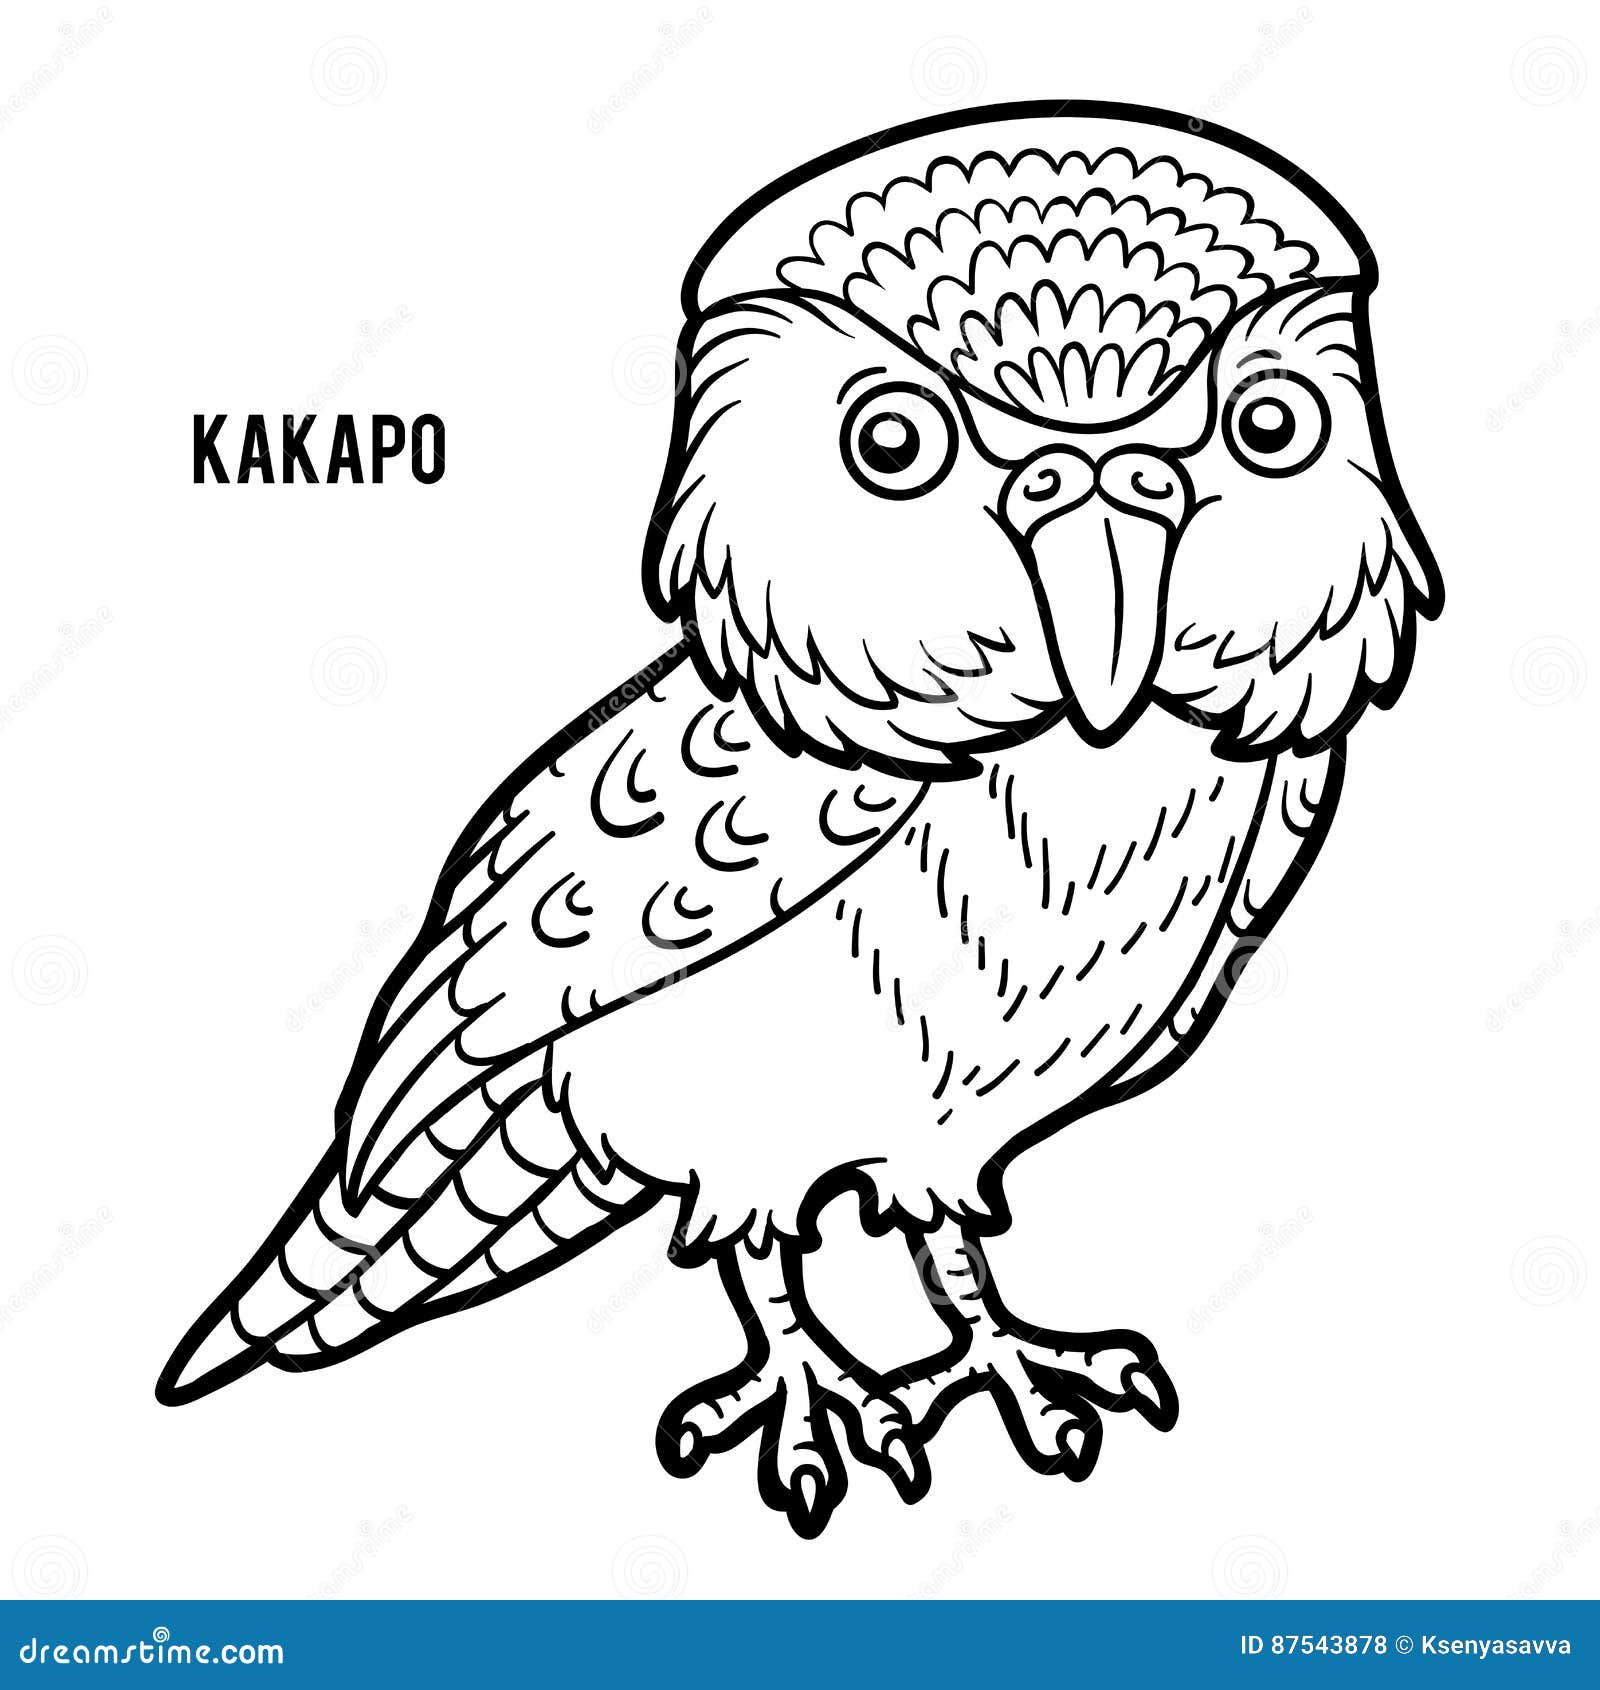 Coloring book, Kakapo stock vector. Illustration of bird - 87543878